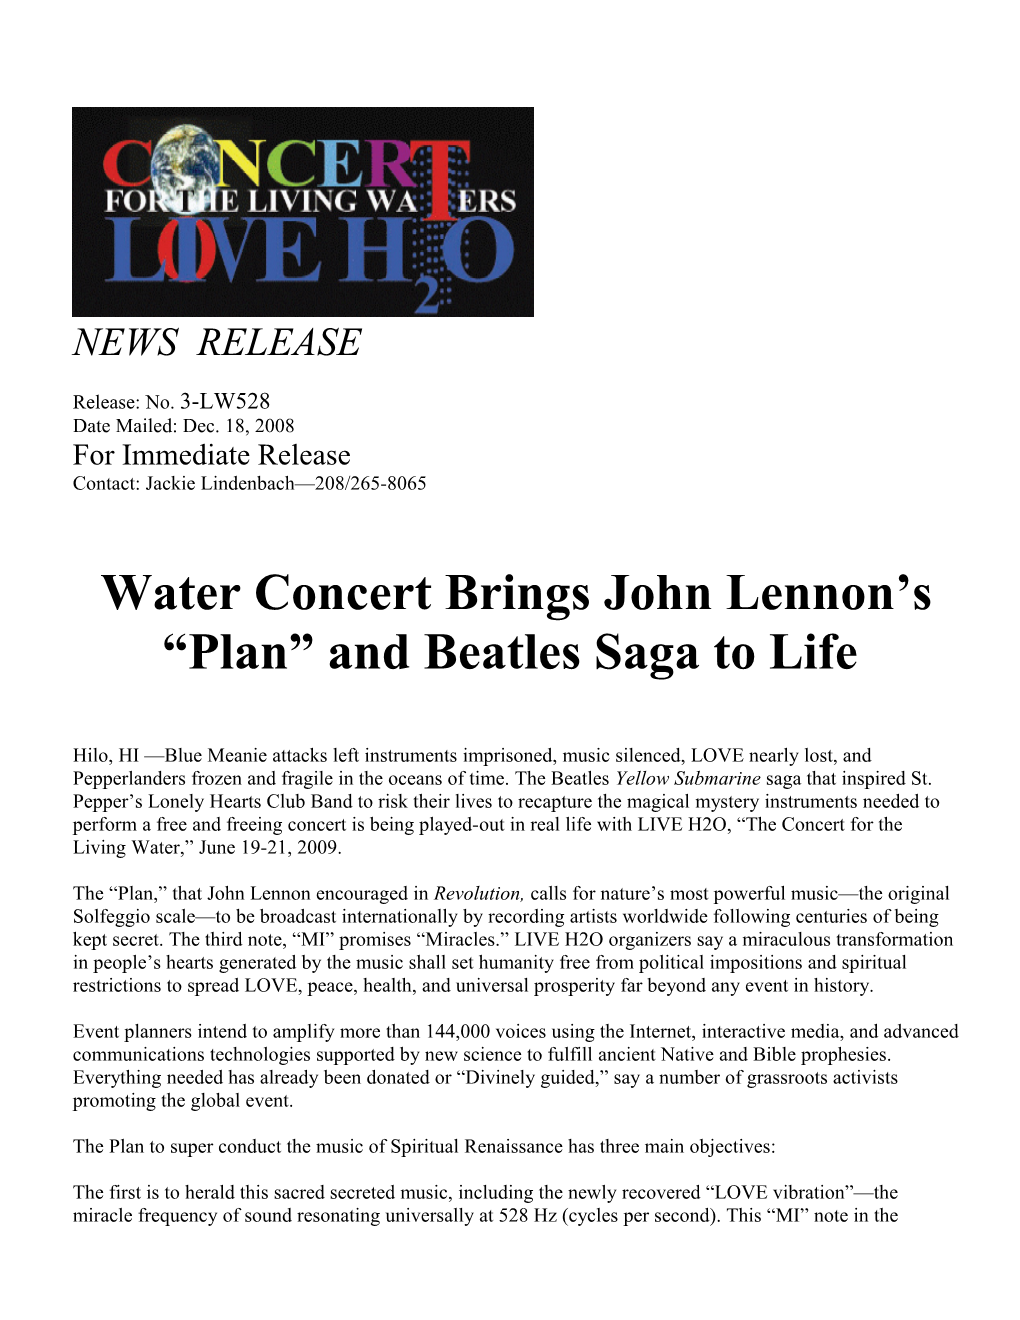 Water Concert Brings John Lennon S Plan and Beatles Saga to Life